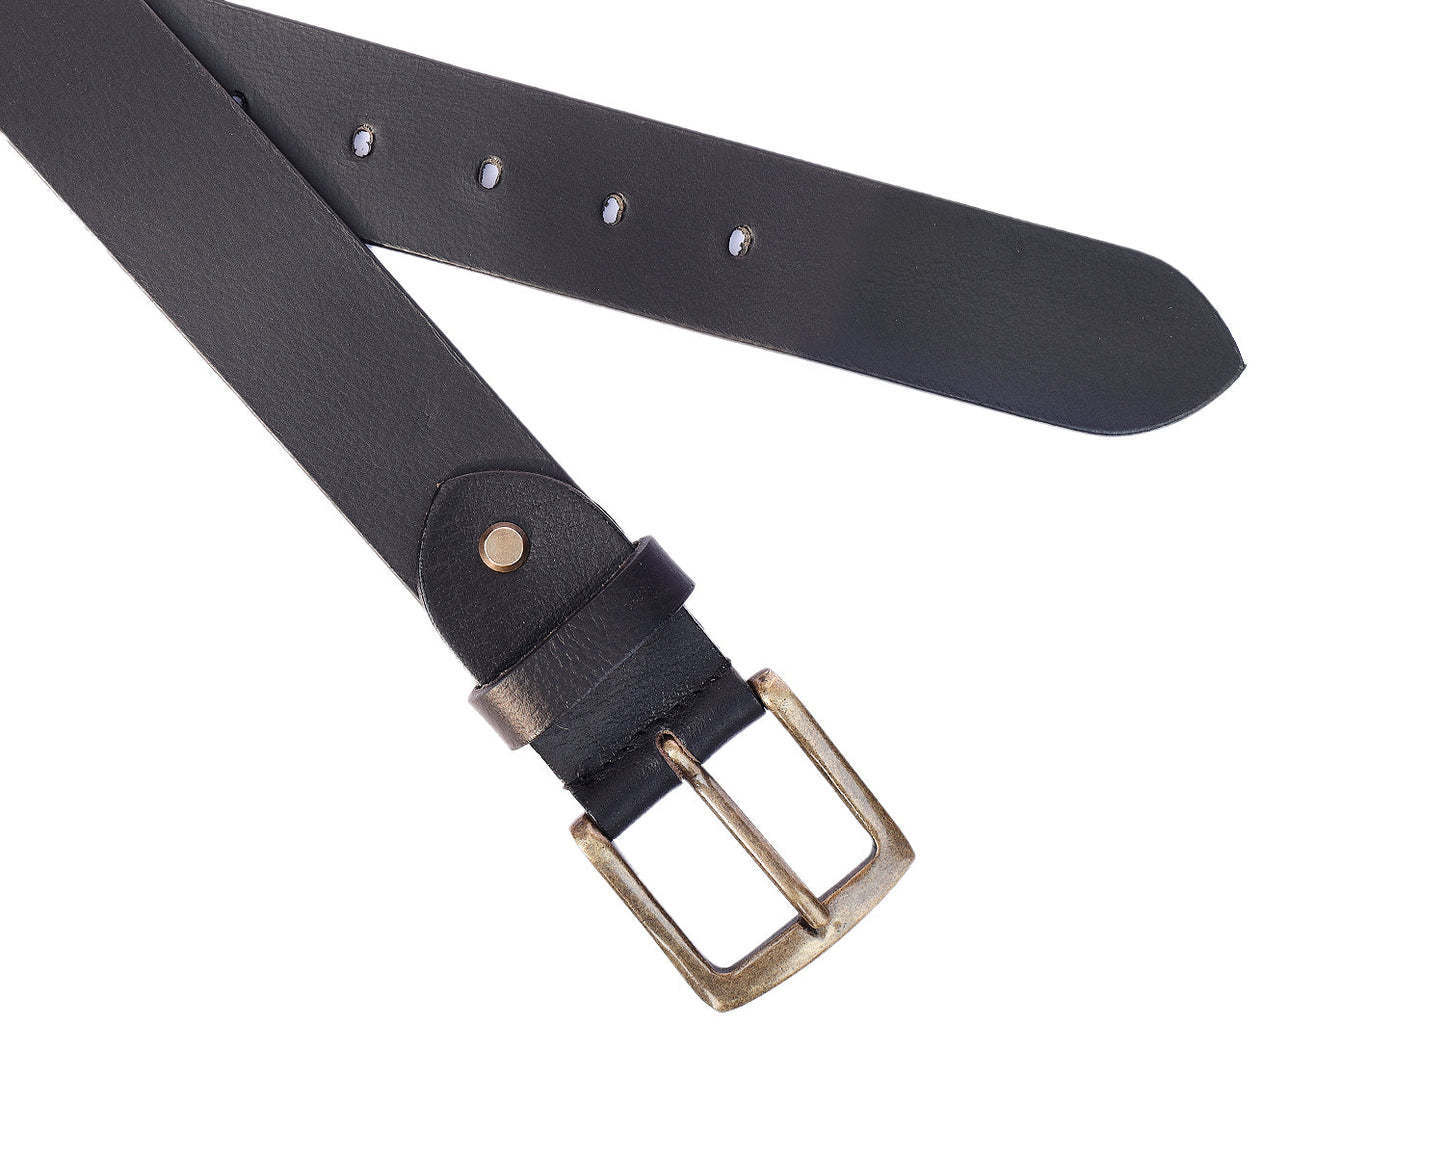 Premium Black Leather Belt With Golden Buckle - CELTICINDIA